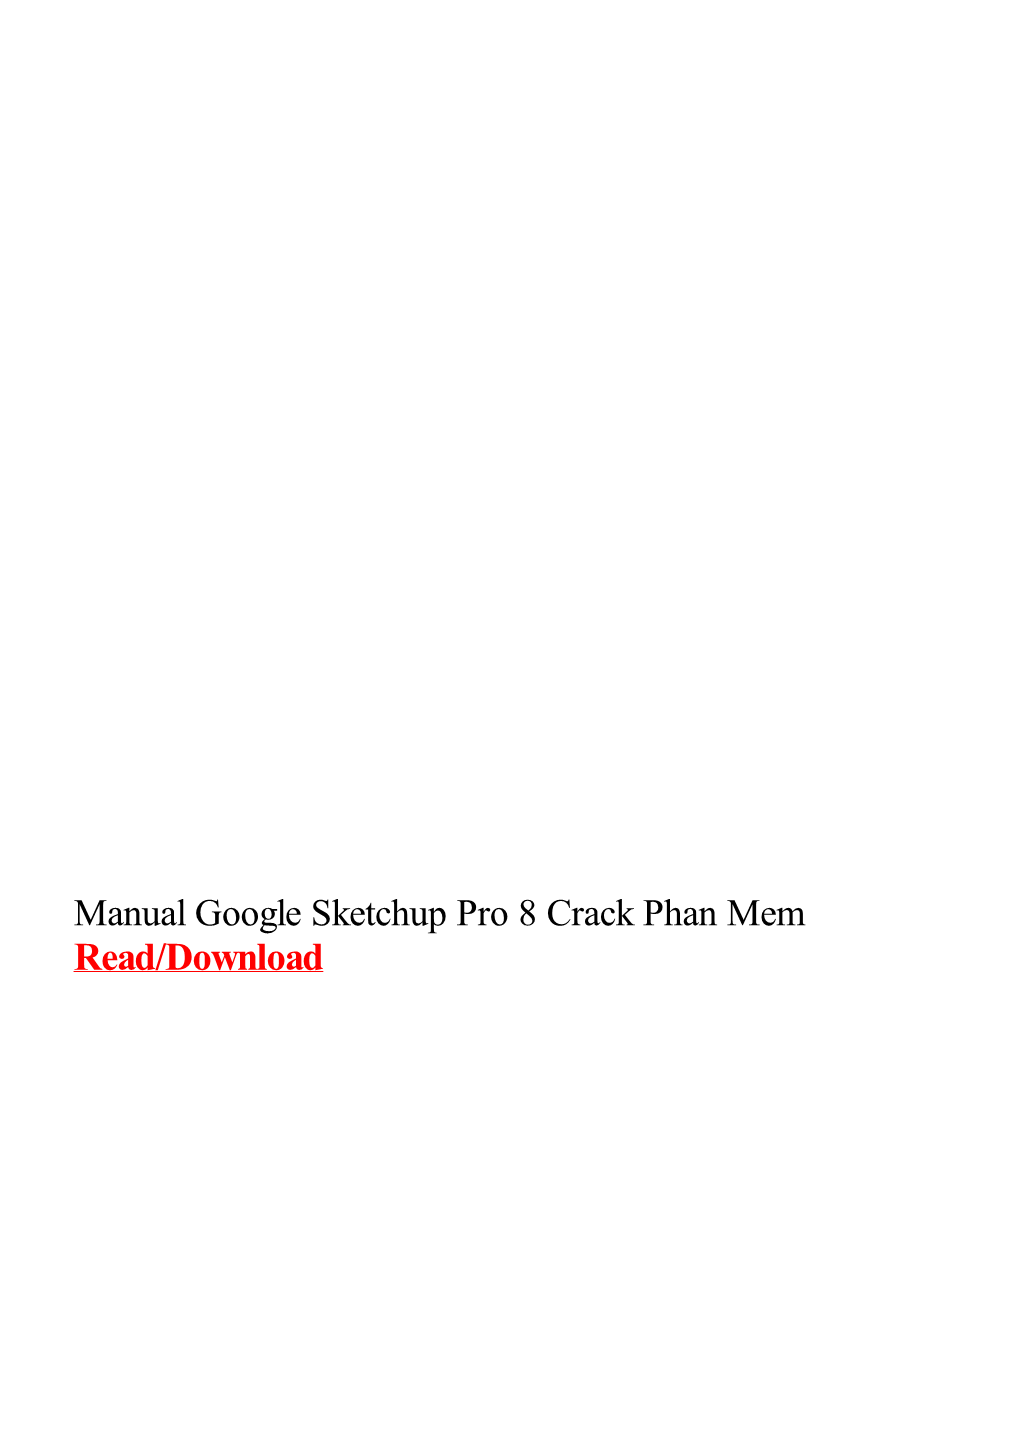 Manual Google Sketchup Pro 8 Crack Phan Mem Serial Google Sketchup Pro 8 Key Keygen Google Sketchup Pro 2015 Crack Is Rewriting